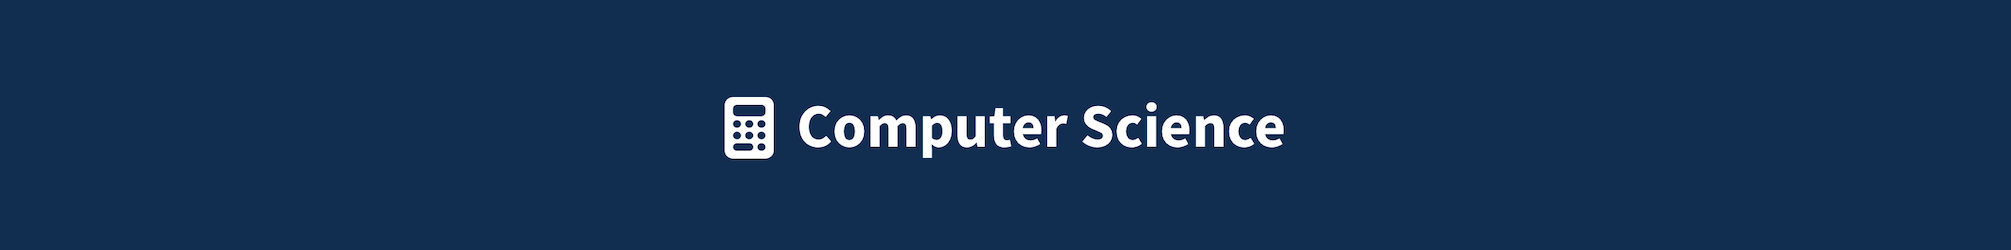 Computer science